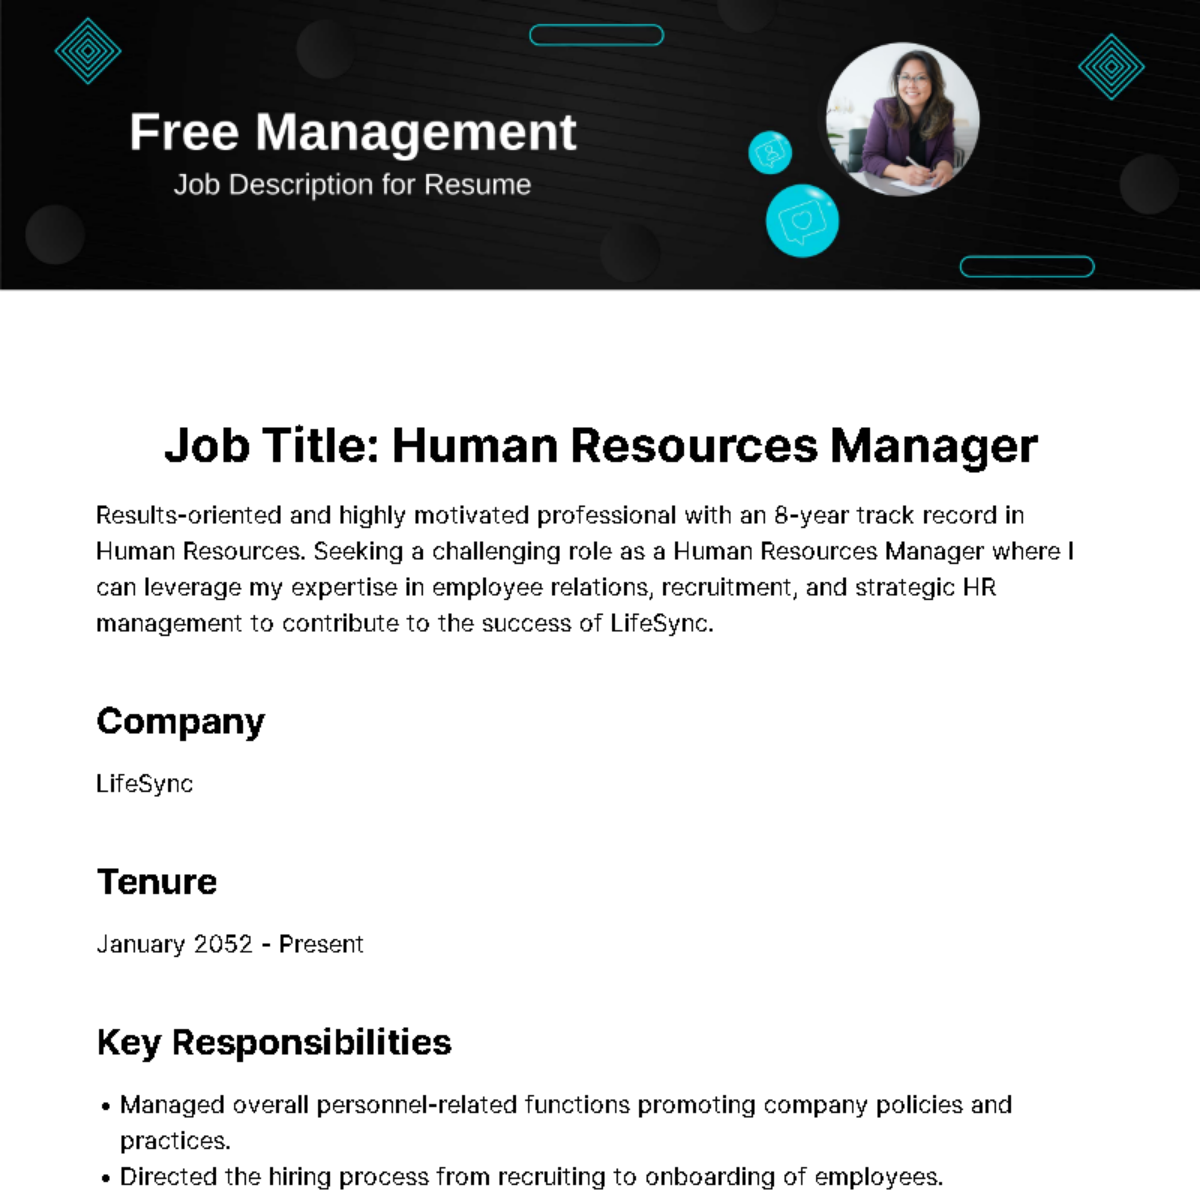 Management Job Description for Resume Template